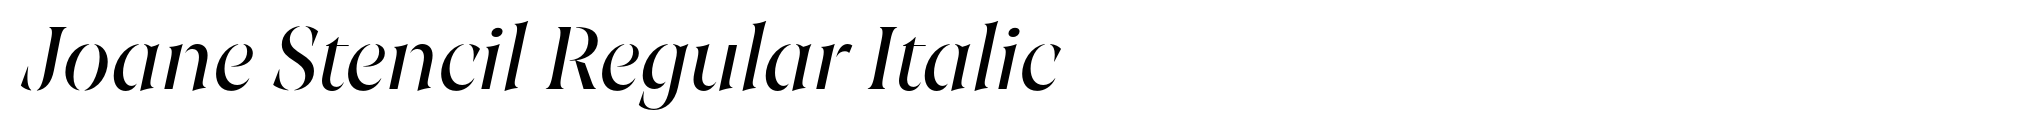 Joane Stencil Regular Italic image